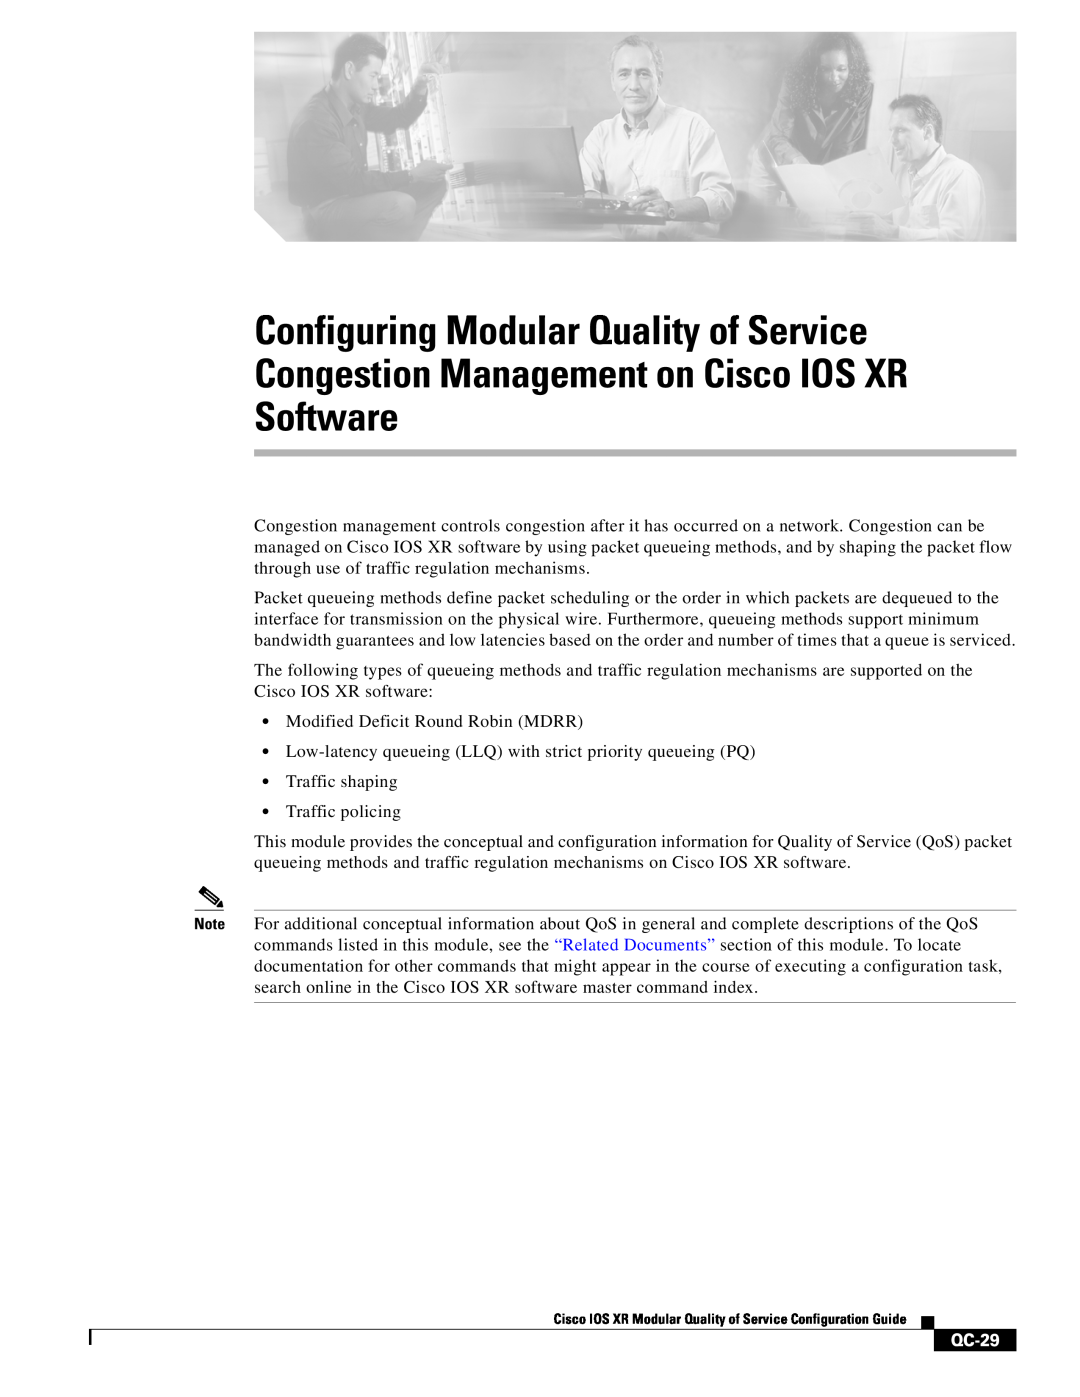 Cisco Systems QC-29 manual 